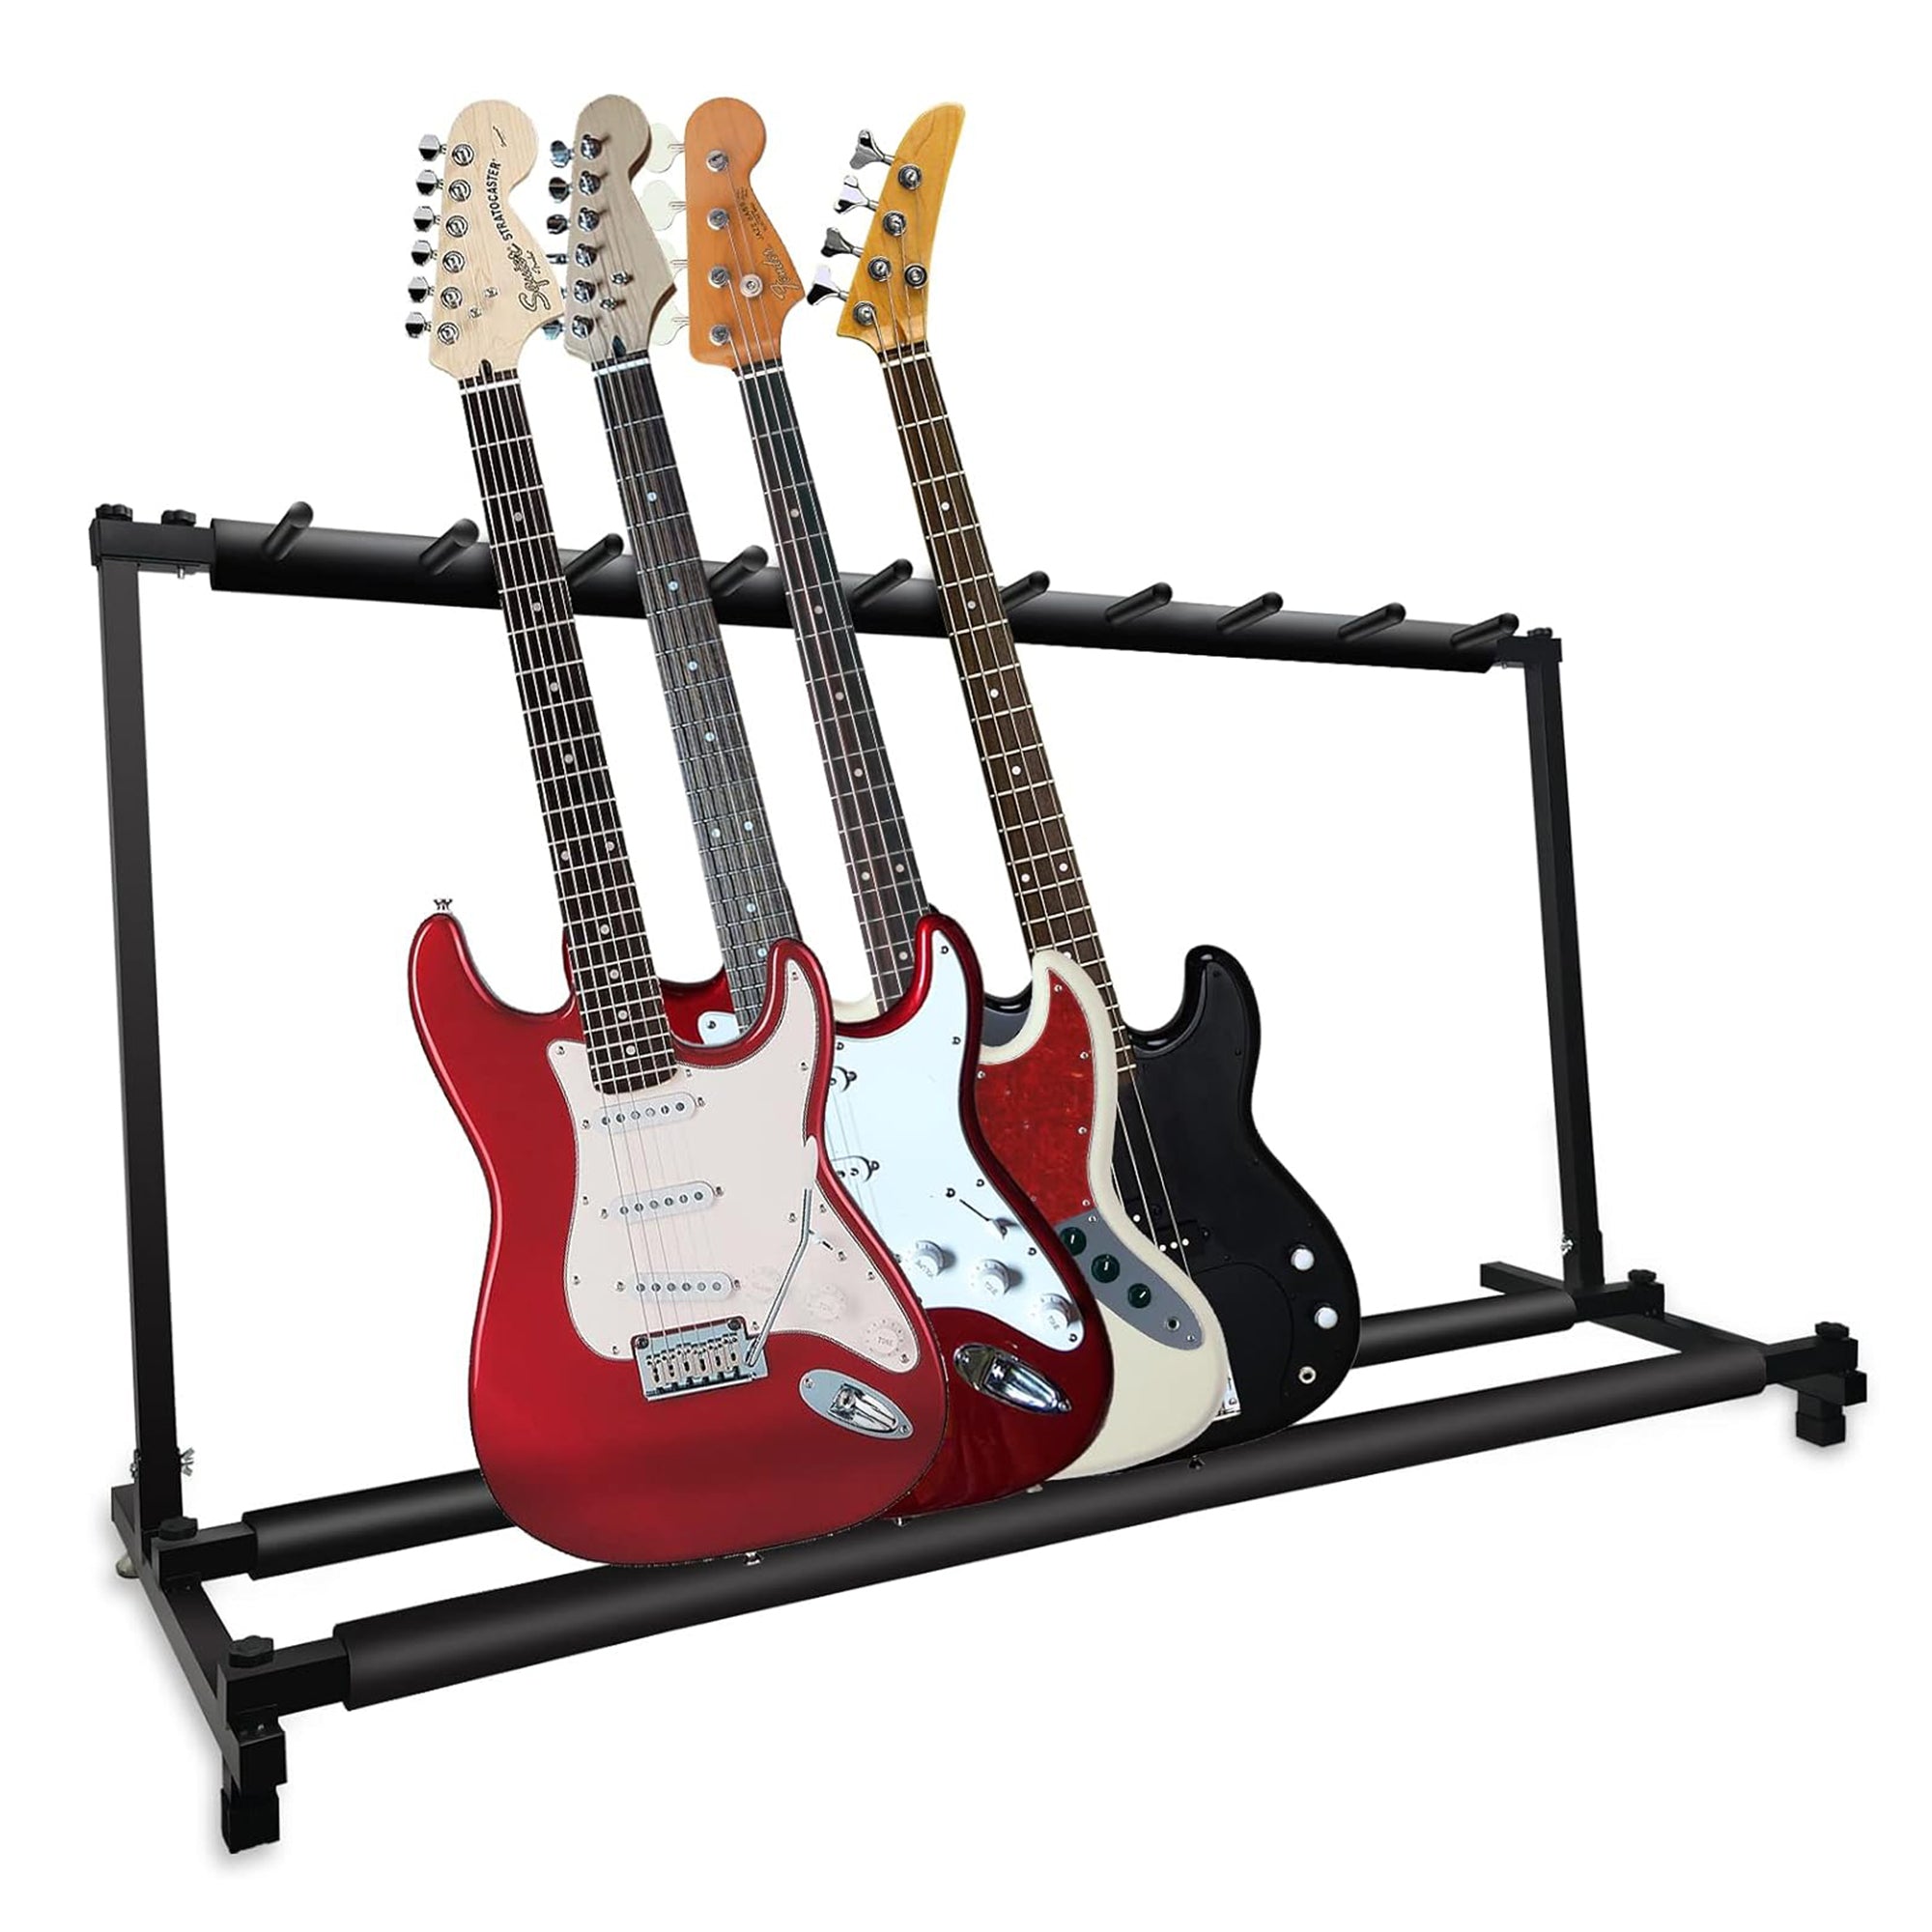 5Core Guitar Rack 9 Slot Multi Guitars Stands Floor Safe Storage for Electric Acoustic Flying V Guitars